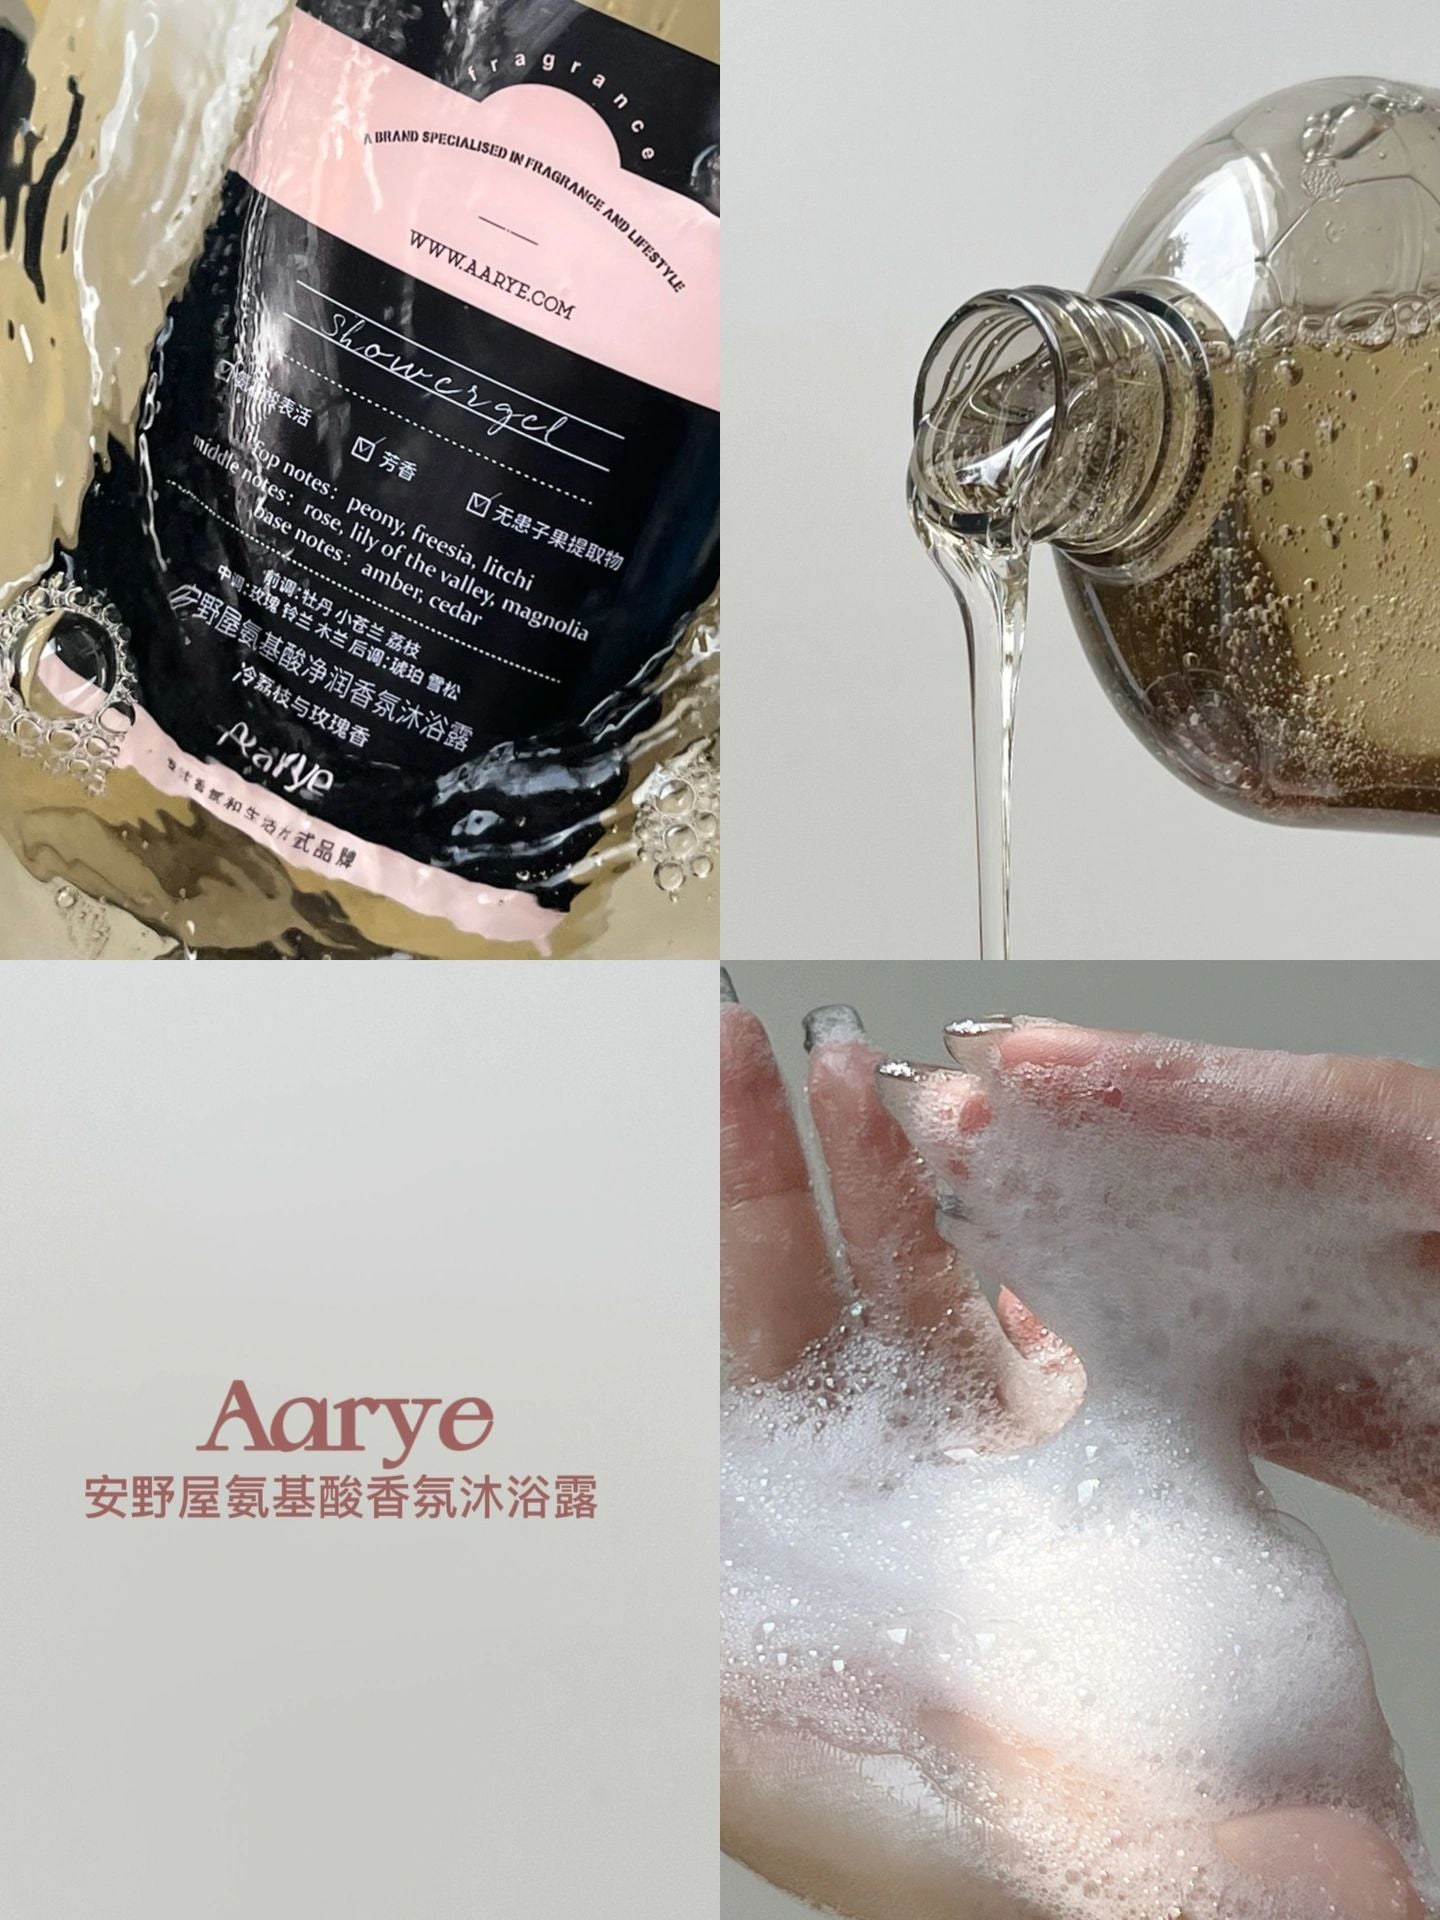 Aarye Long-Lasting Fragrance Moisturizing Amino Acids Shower Gel 300g 安野屋持久留香氨基酸沐浴露